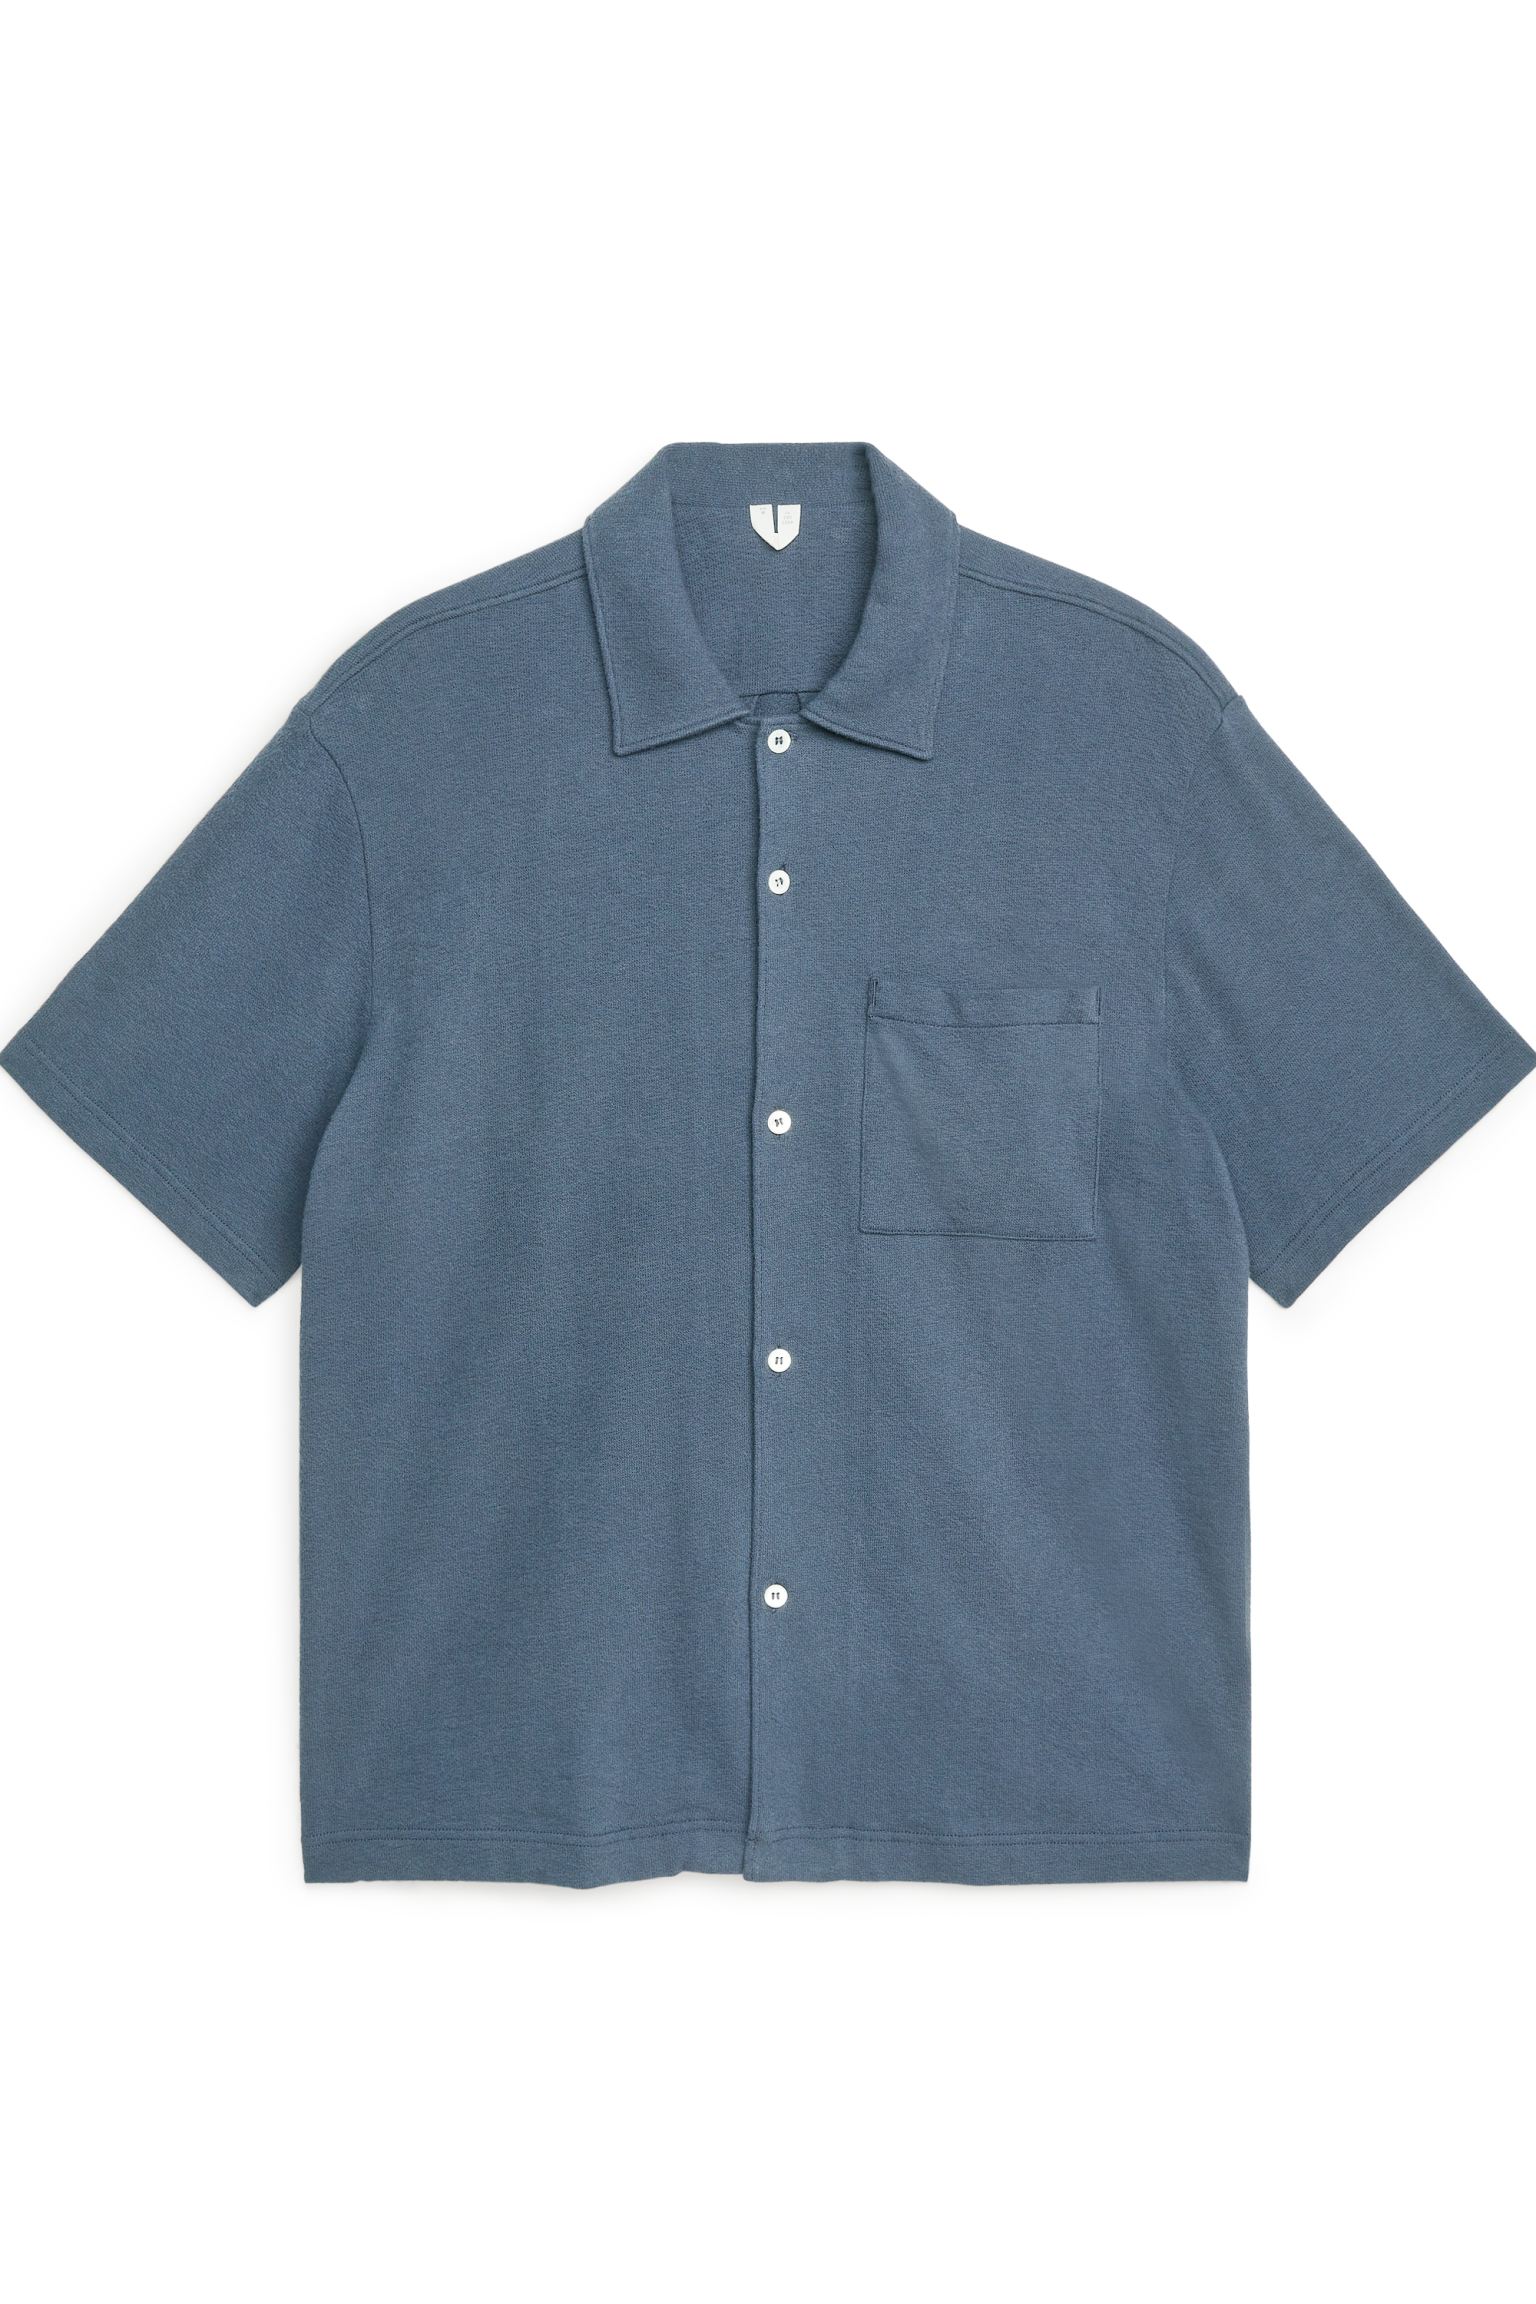 Рубашка мужская ARKET 989229008 синяя M (доставка из-за рубежа)